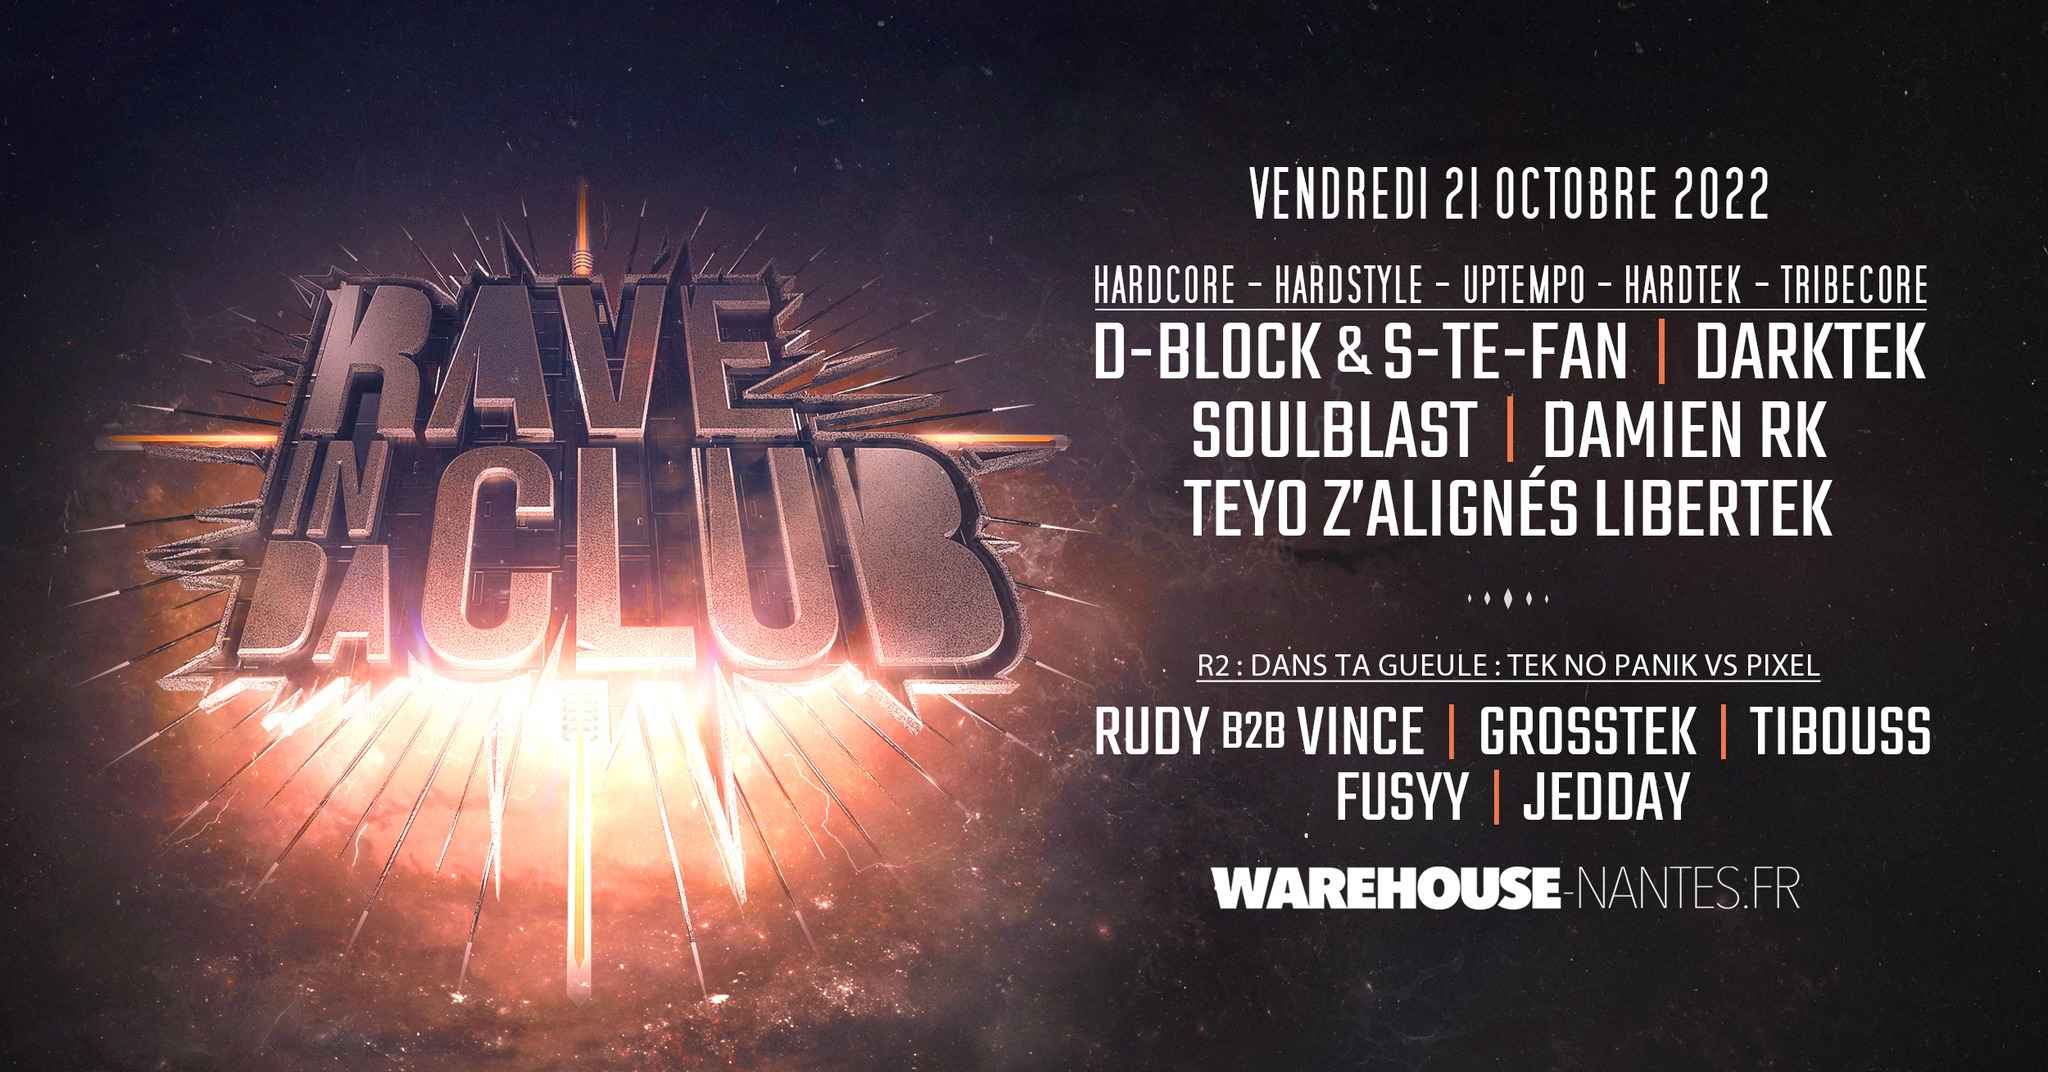 Rave in Da Club w/ D-Block & S-te-Fan